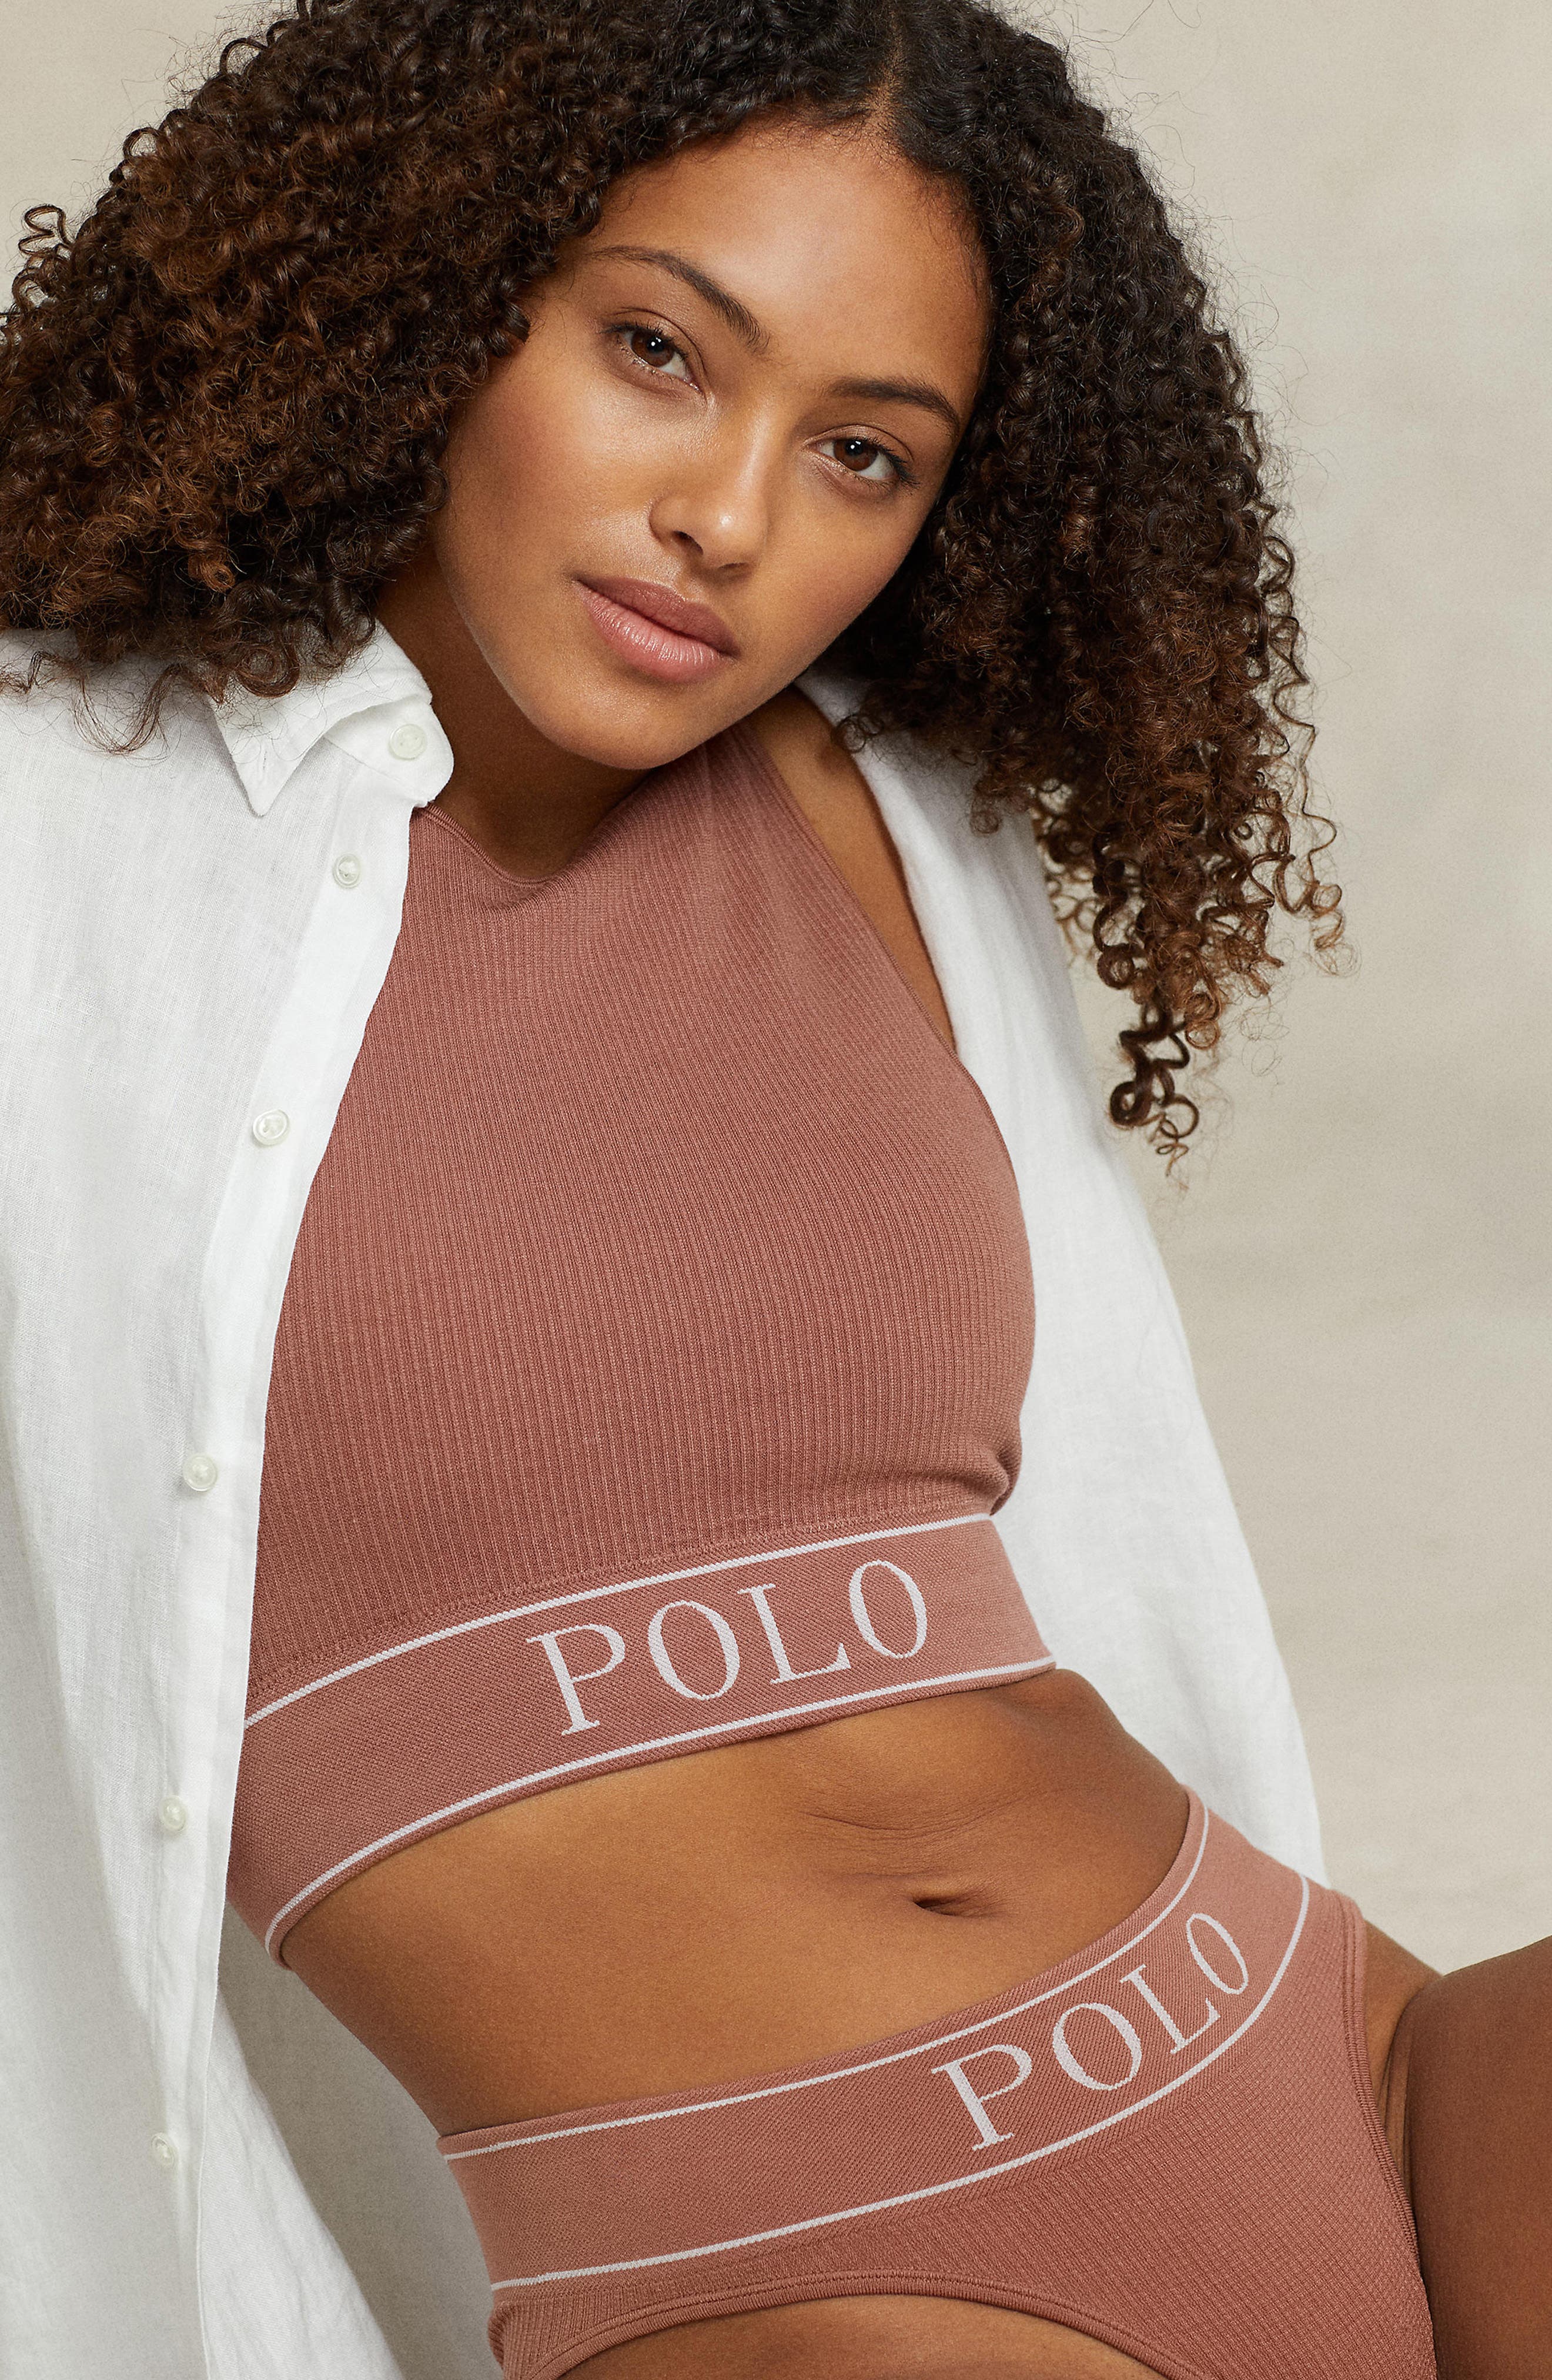 Polo Ralph Lauren Logo Waistband Modern Briefs - 100% Exclusive In